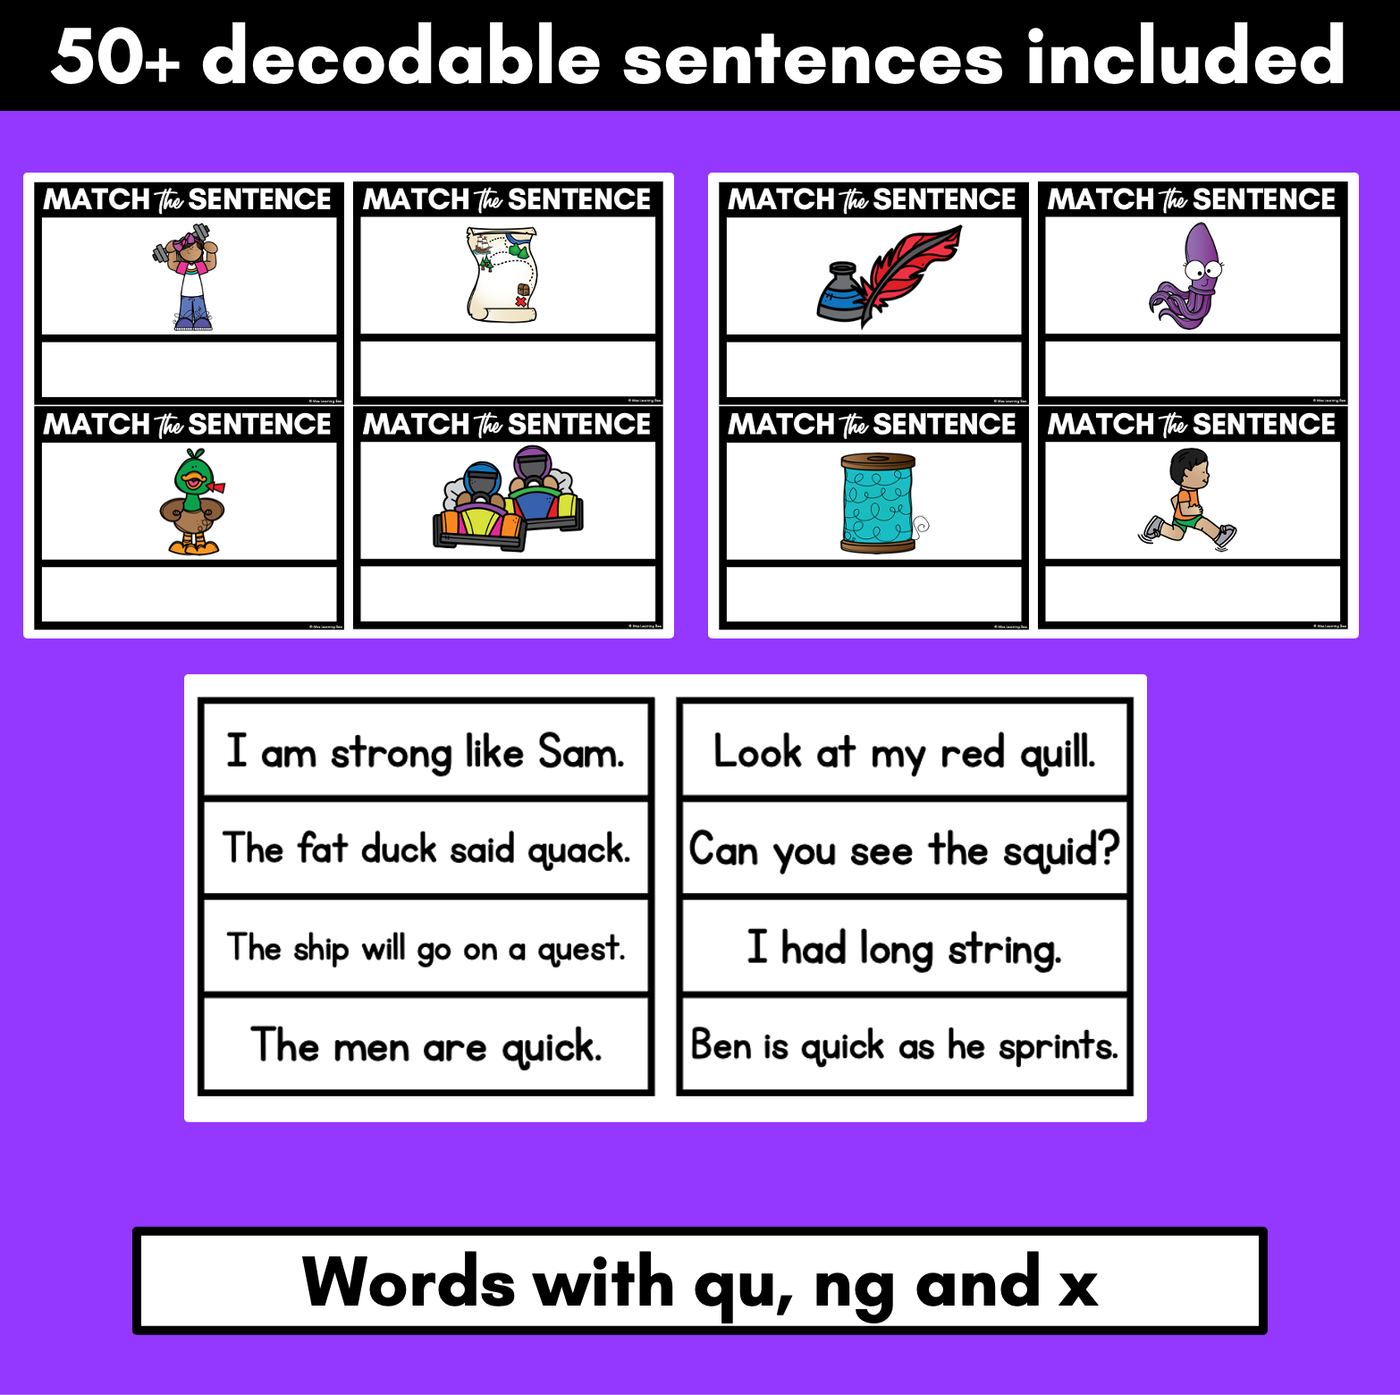 QU NG X Decodable Sentences - Read and Match